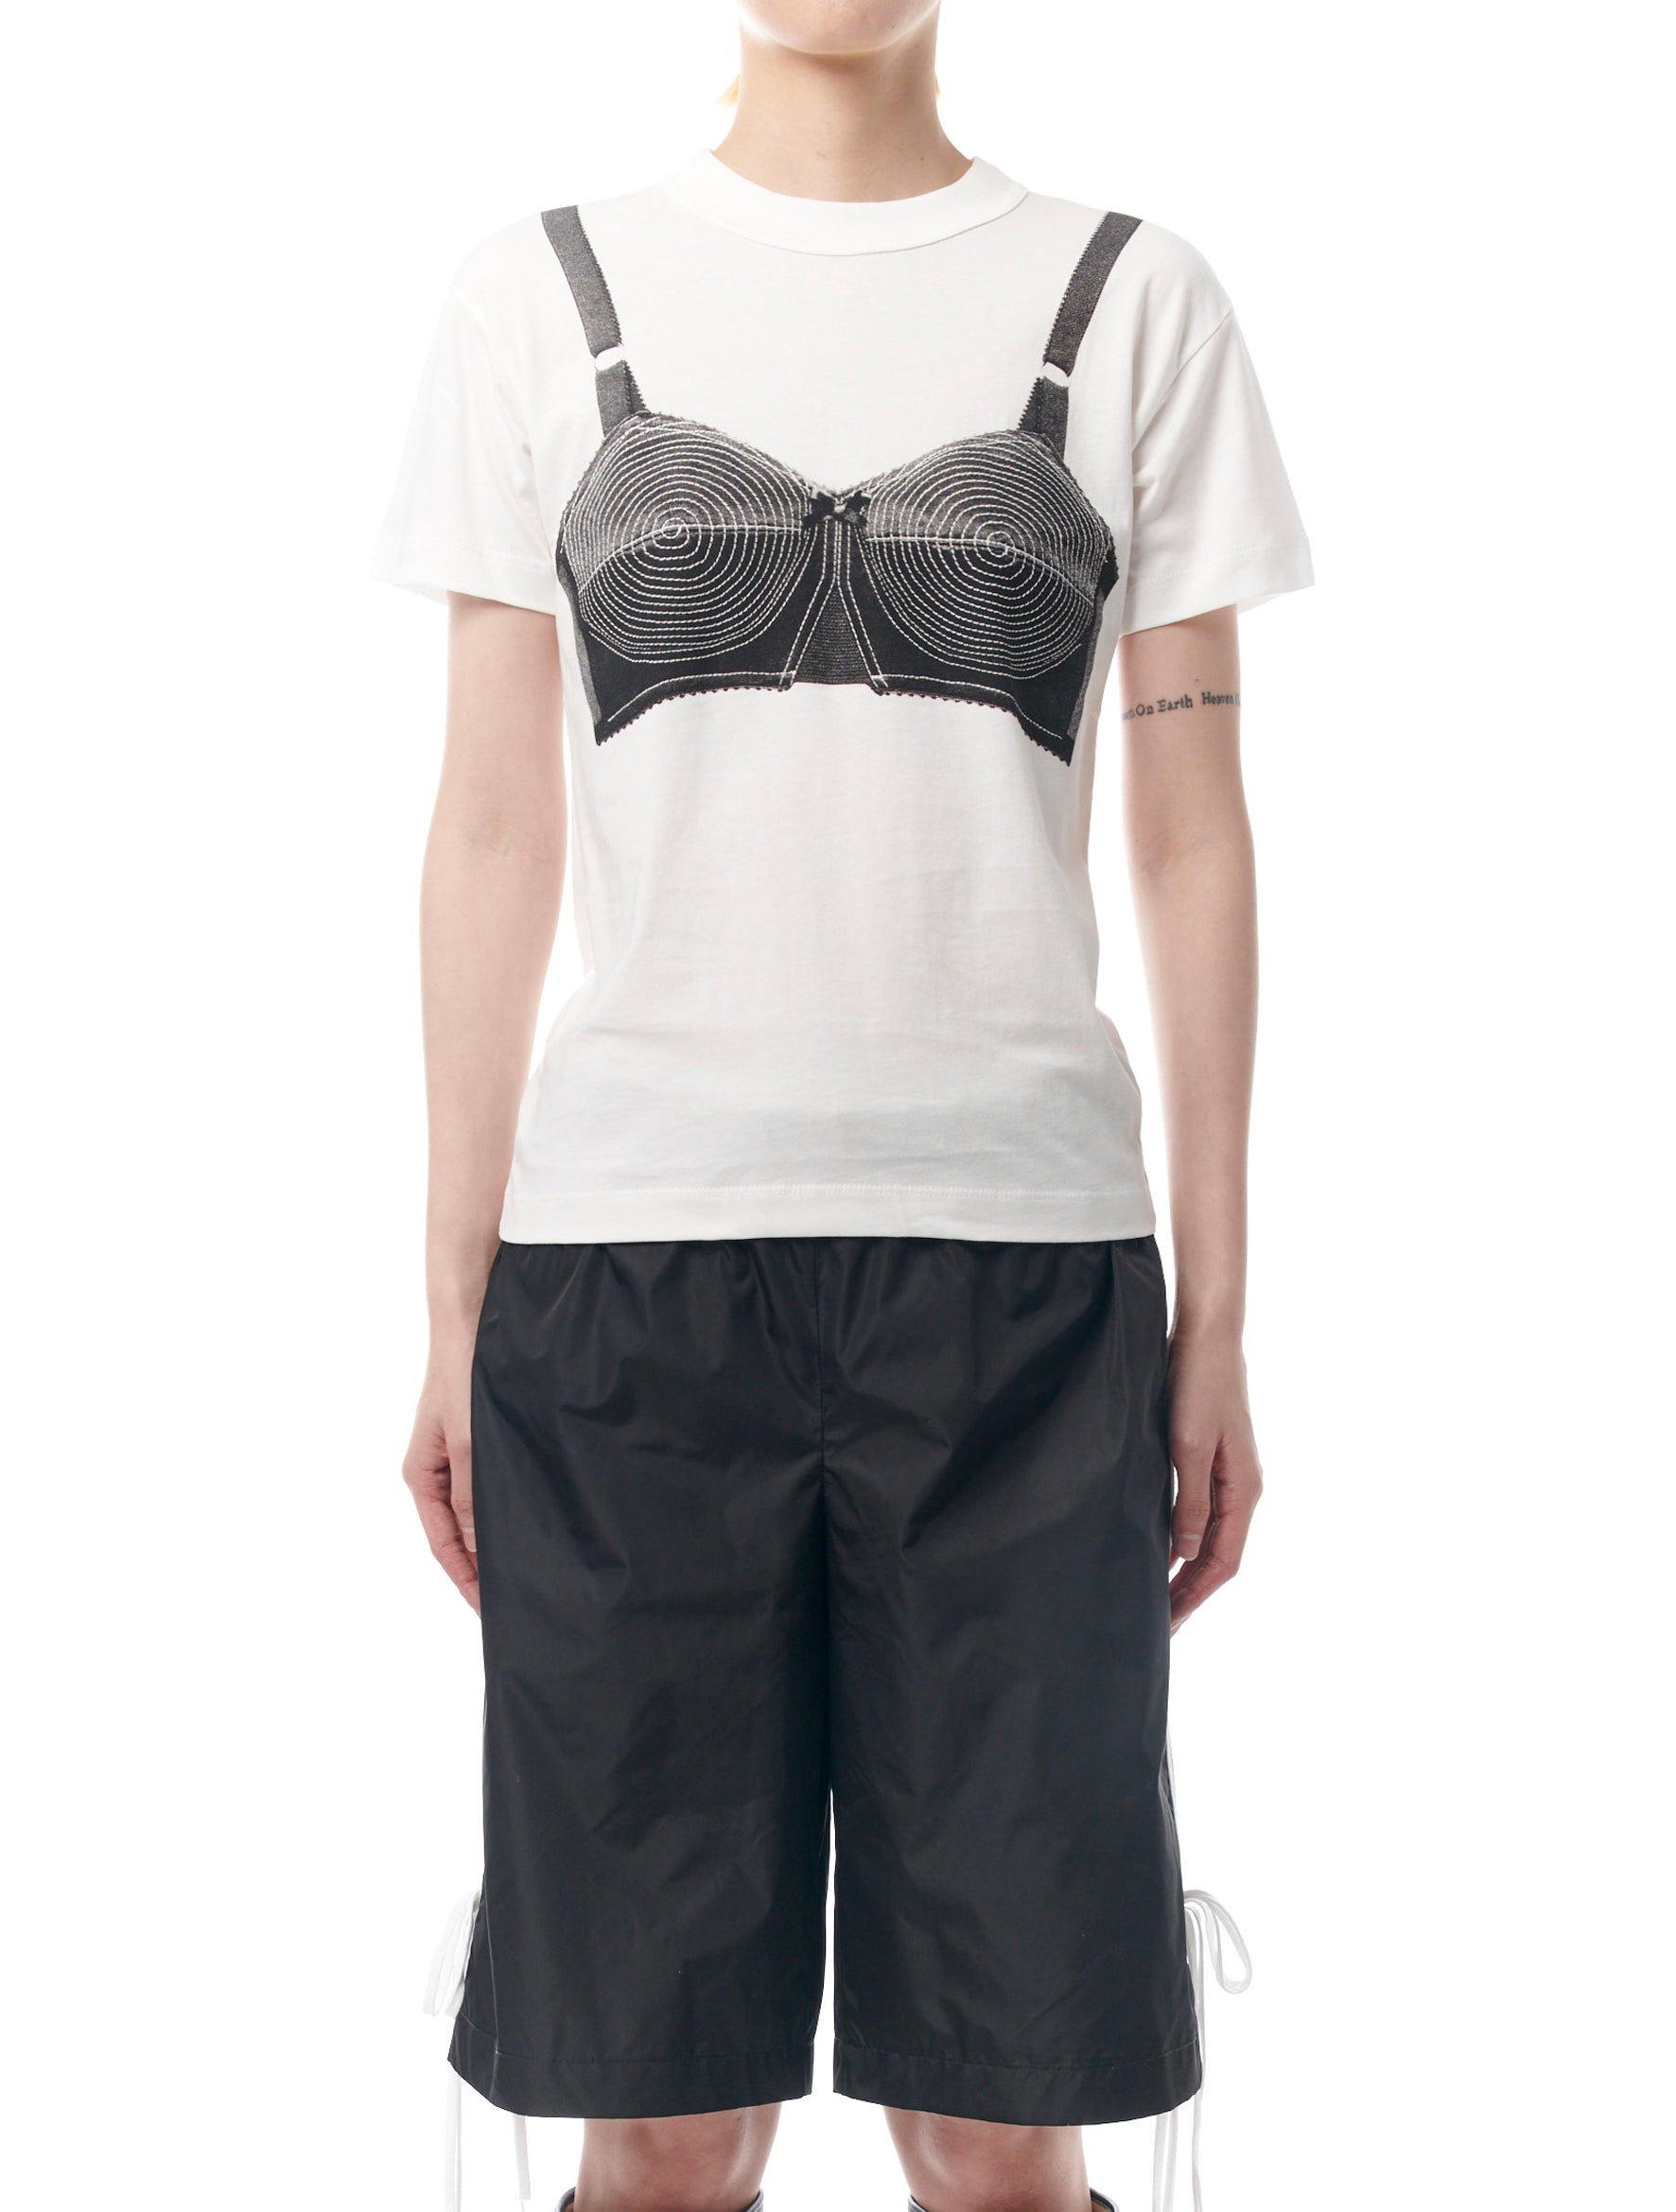 VAQUERA Lingerie-print Cotton T-shirt in White